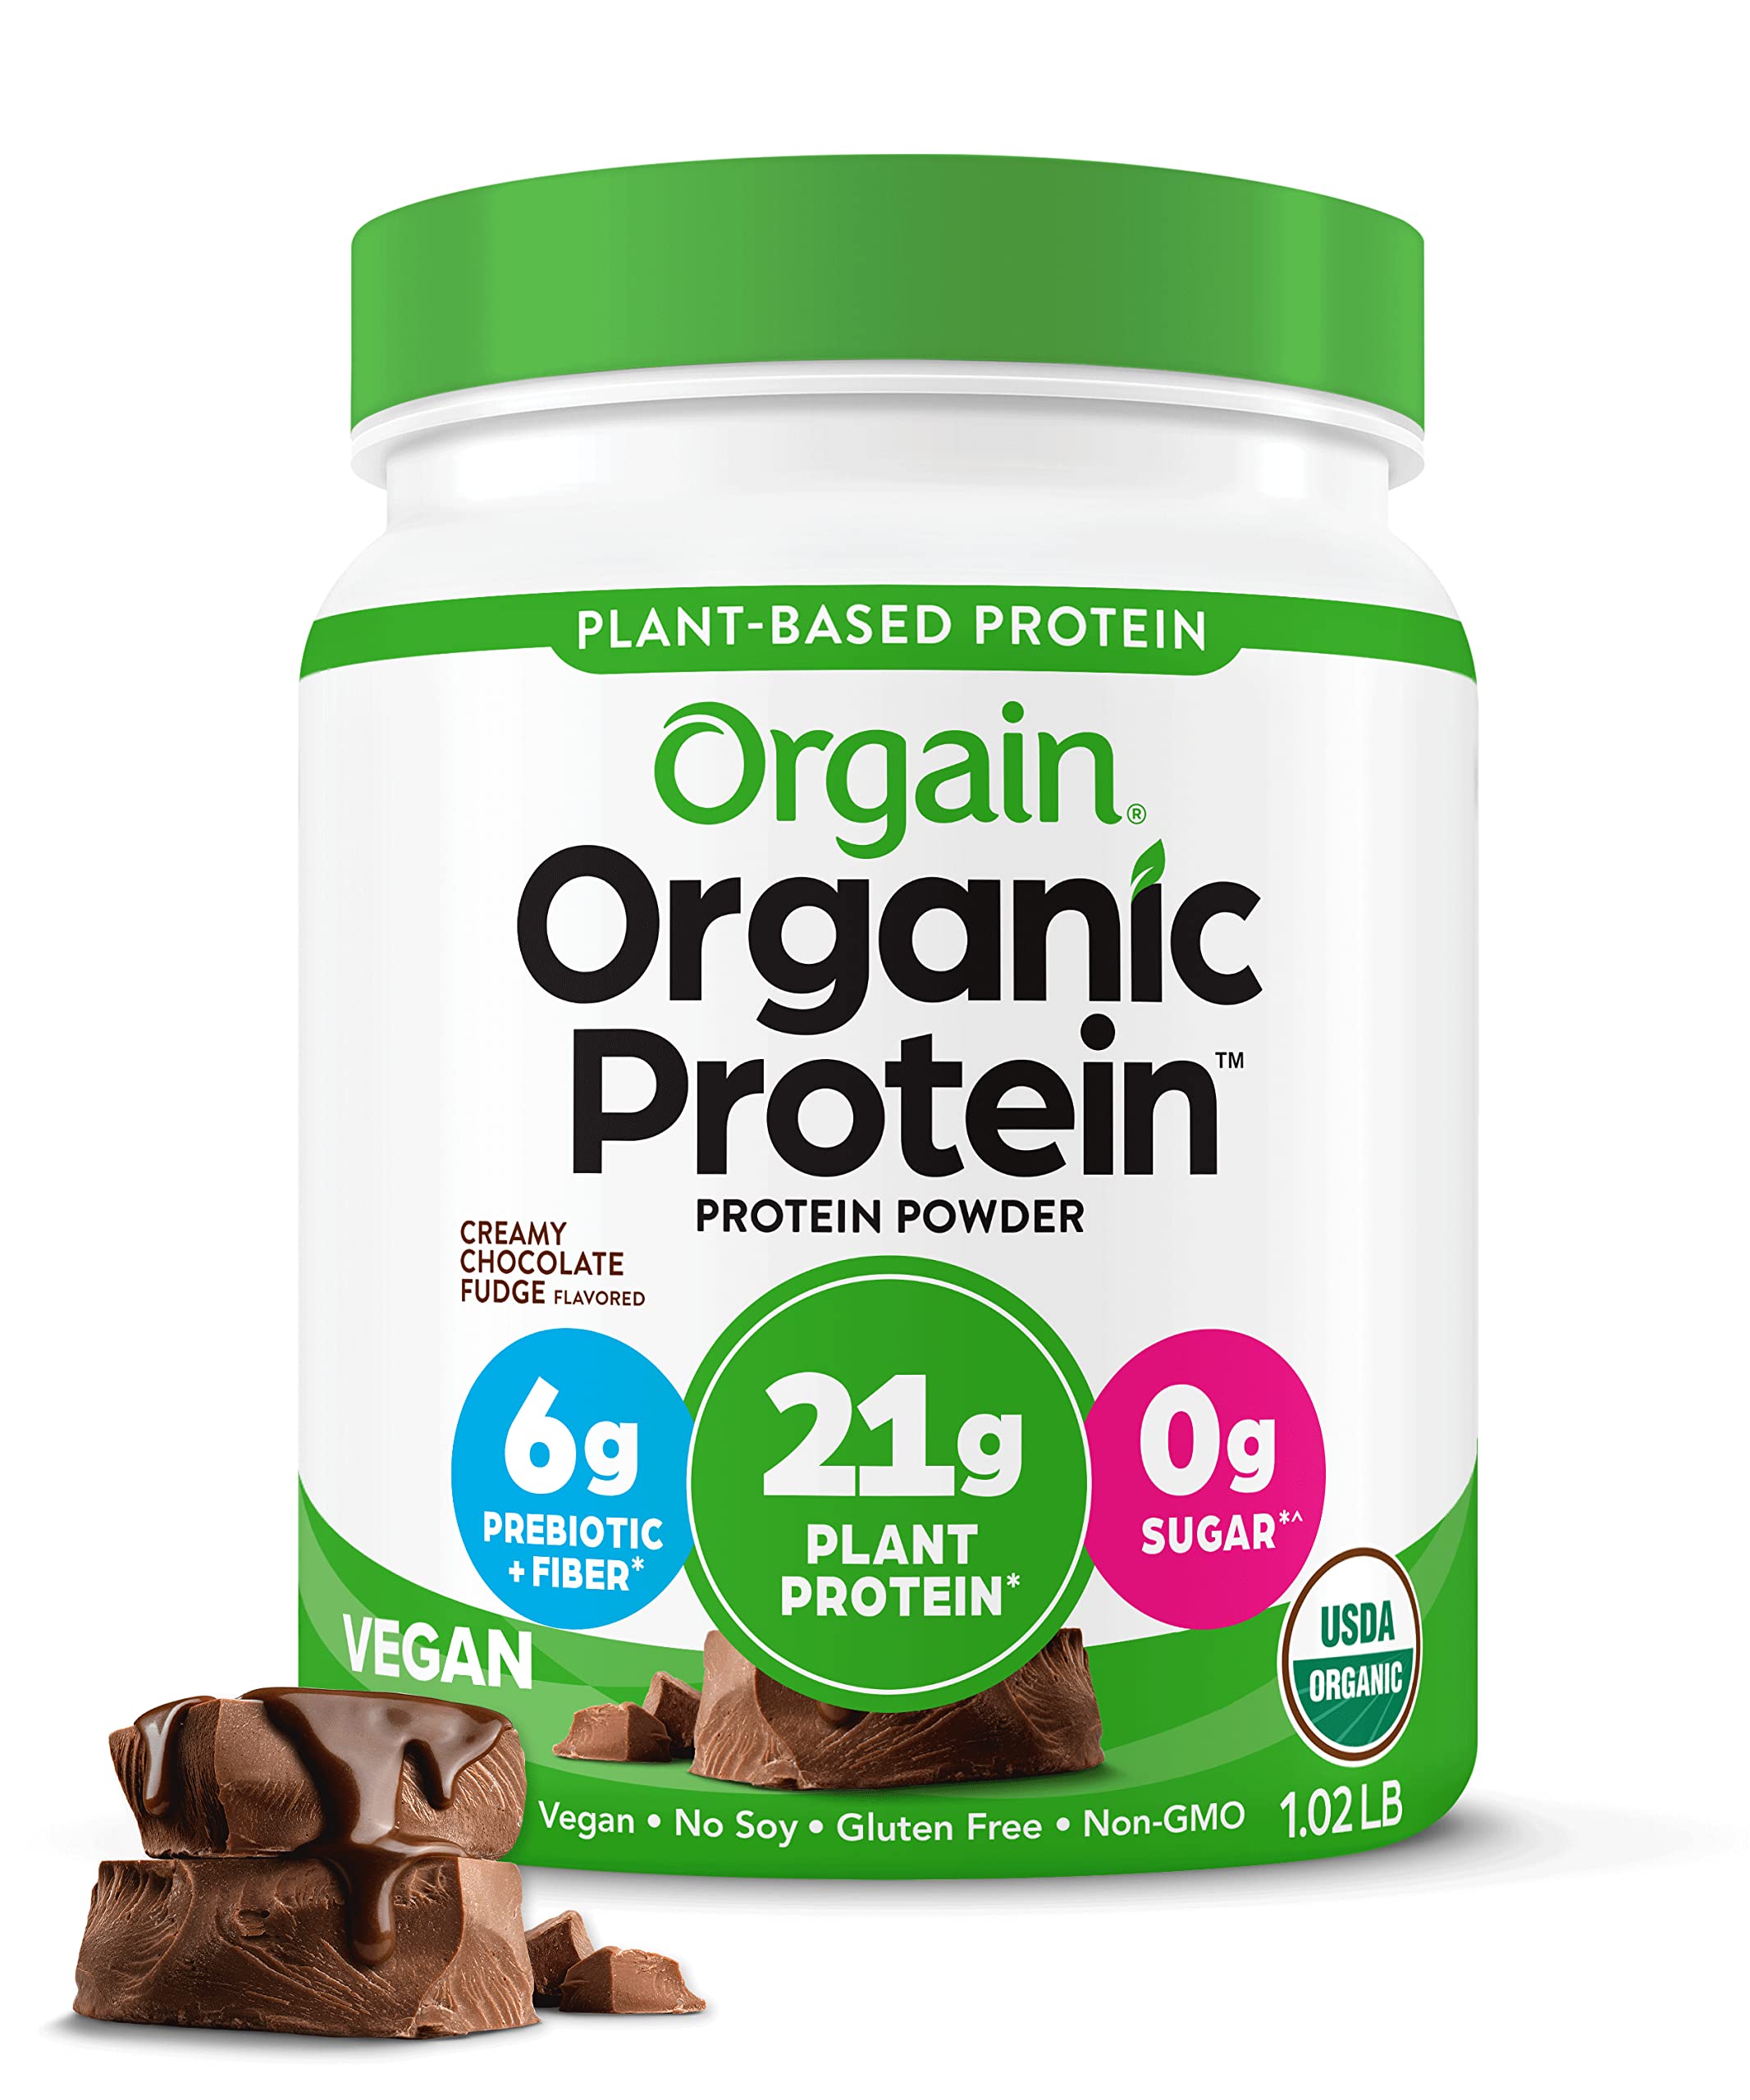 1.02-lb Orgain Organic Vegan Protein Powder (Creamy Chocolate Fudge, 21g Protein) $13.98 w/ S&S + Free Shipping w/ Prime or on $35+